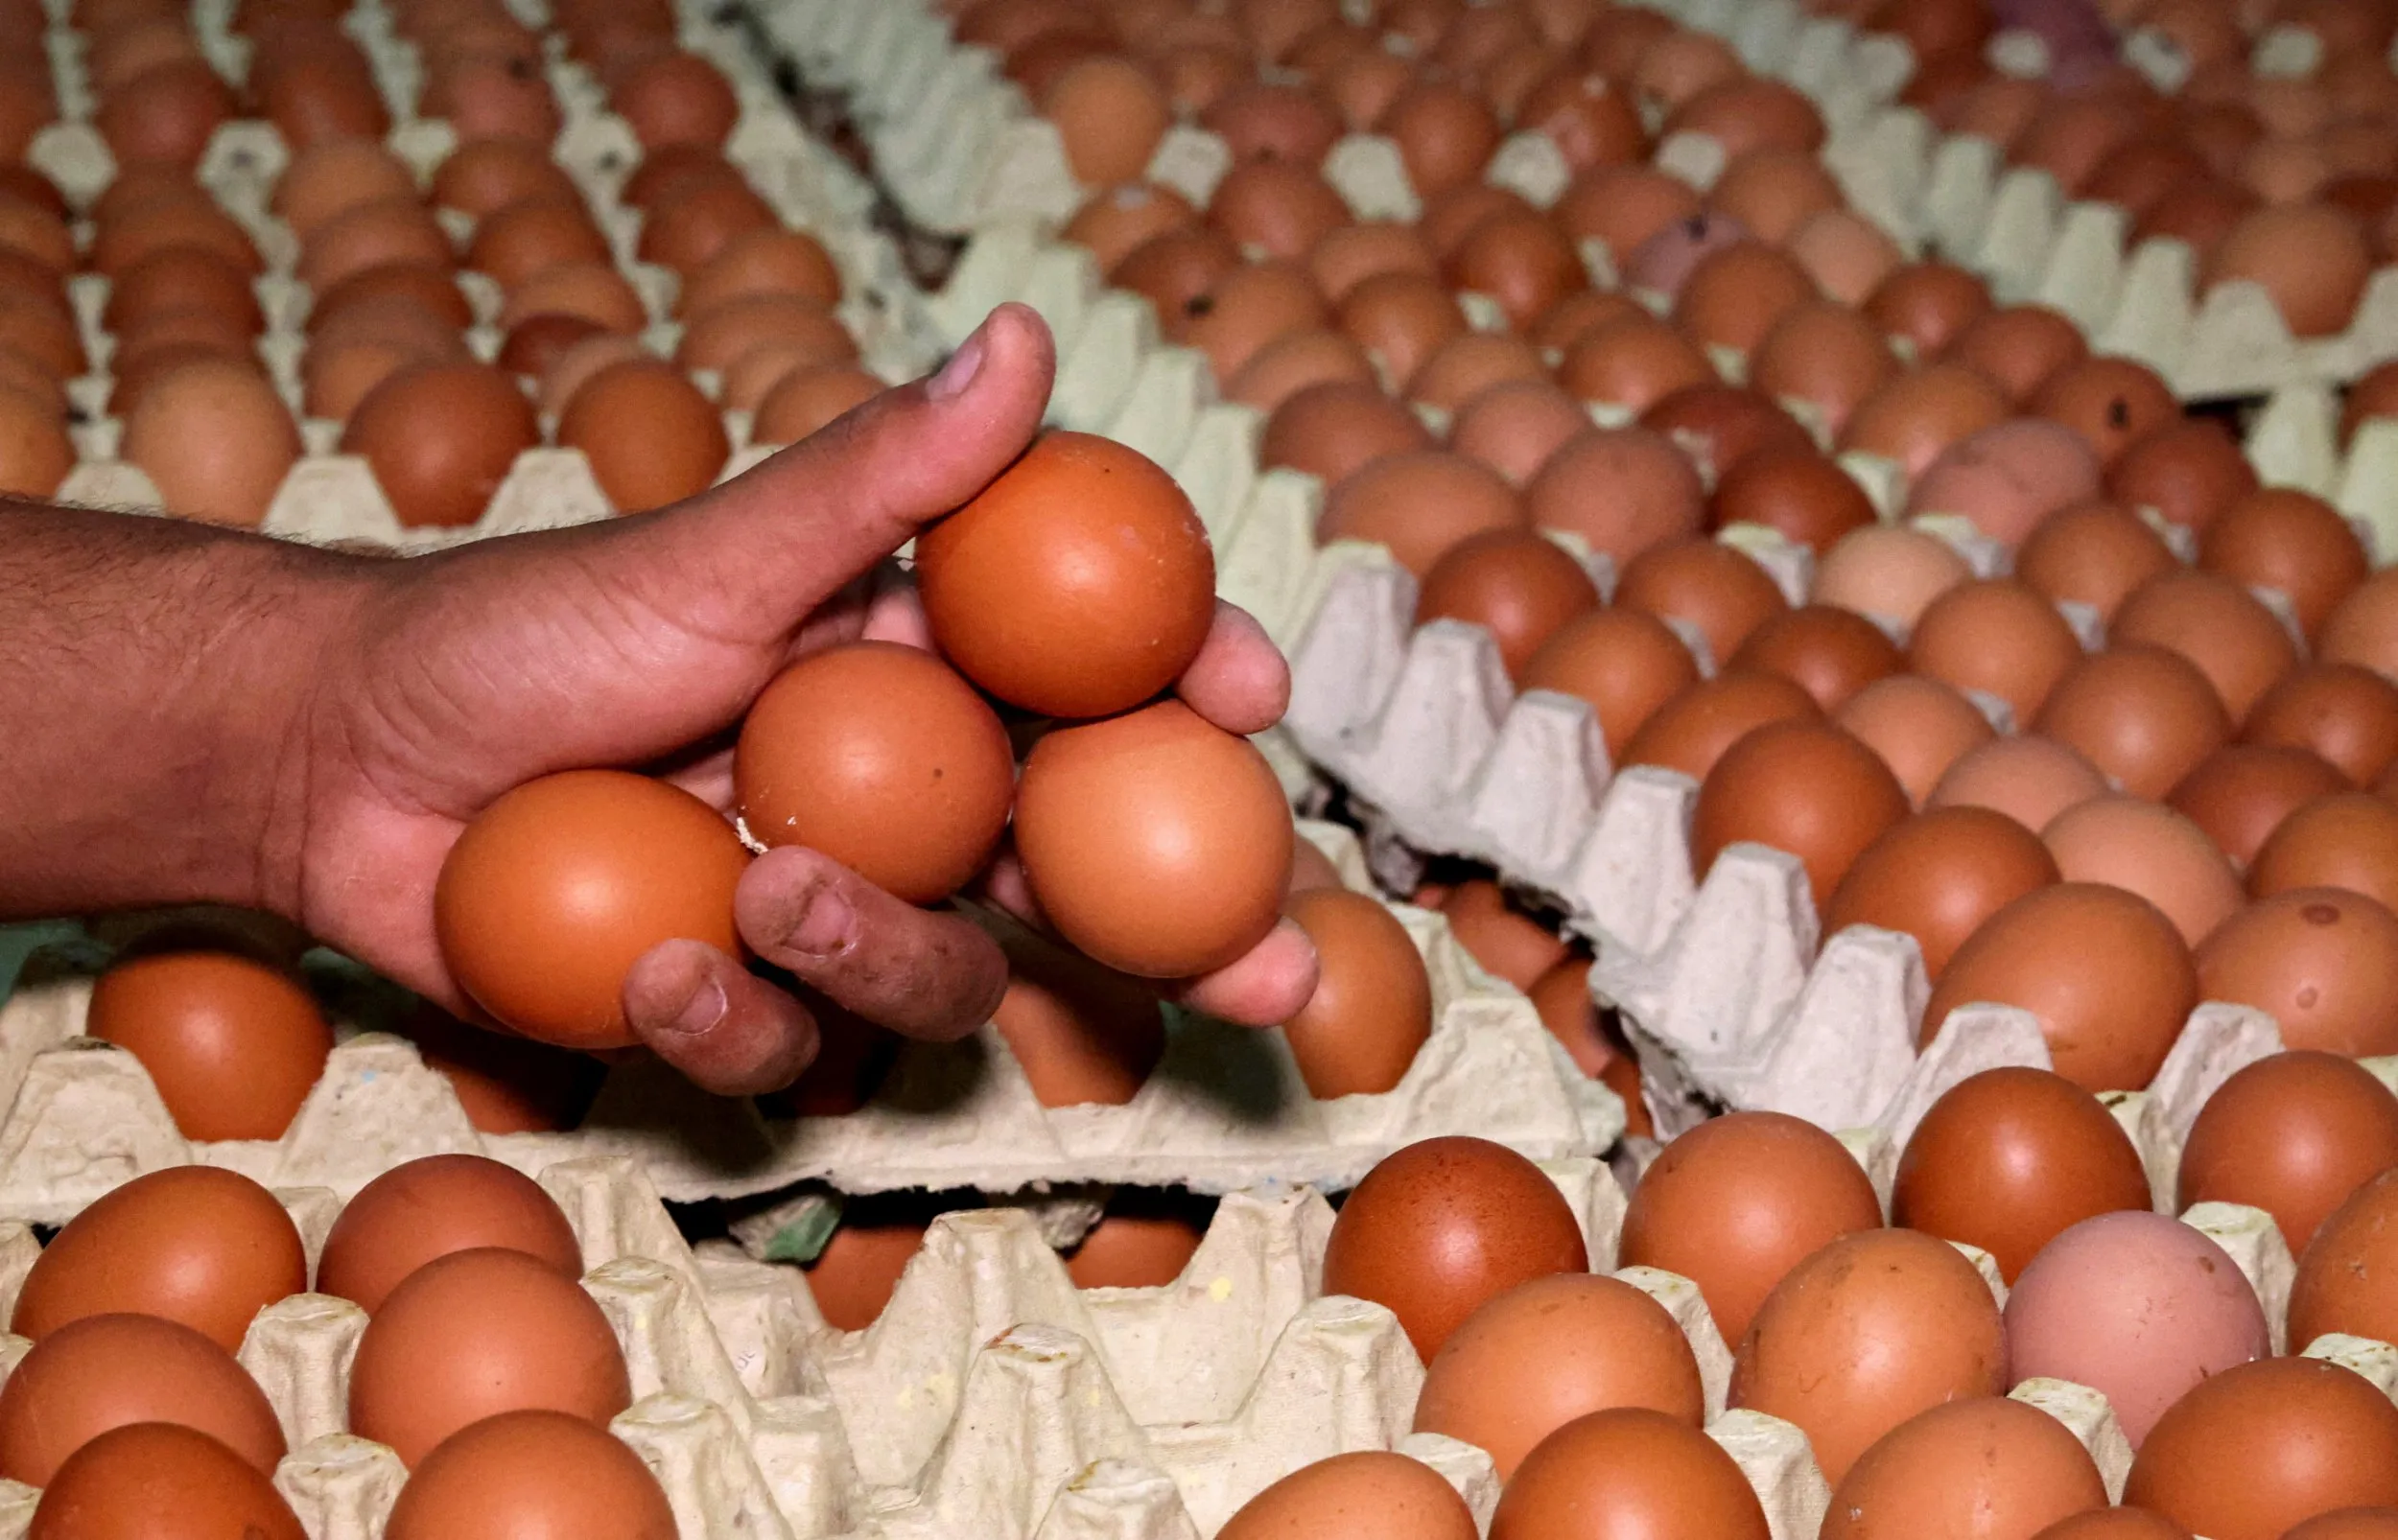 Supermarket retailers start rationing eggs due to avian flu outbreak